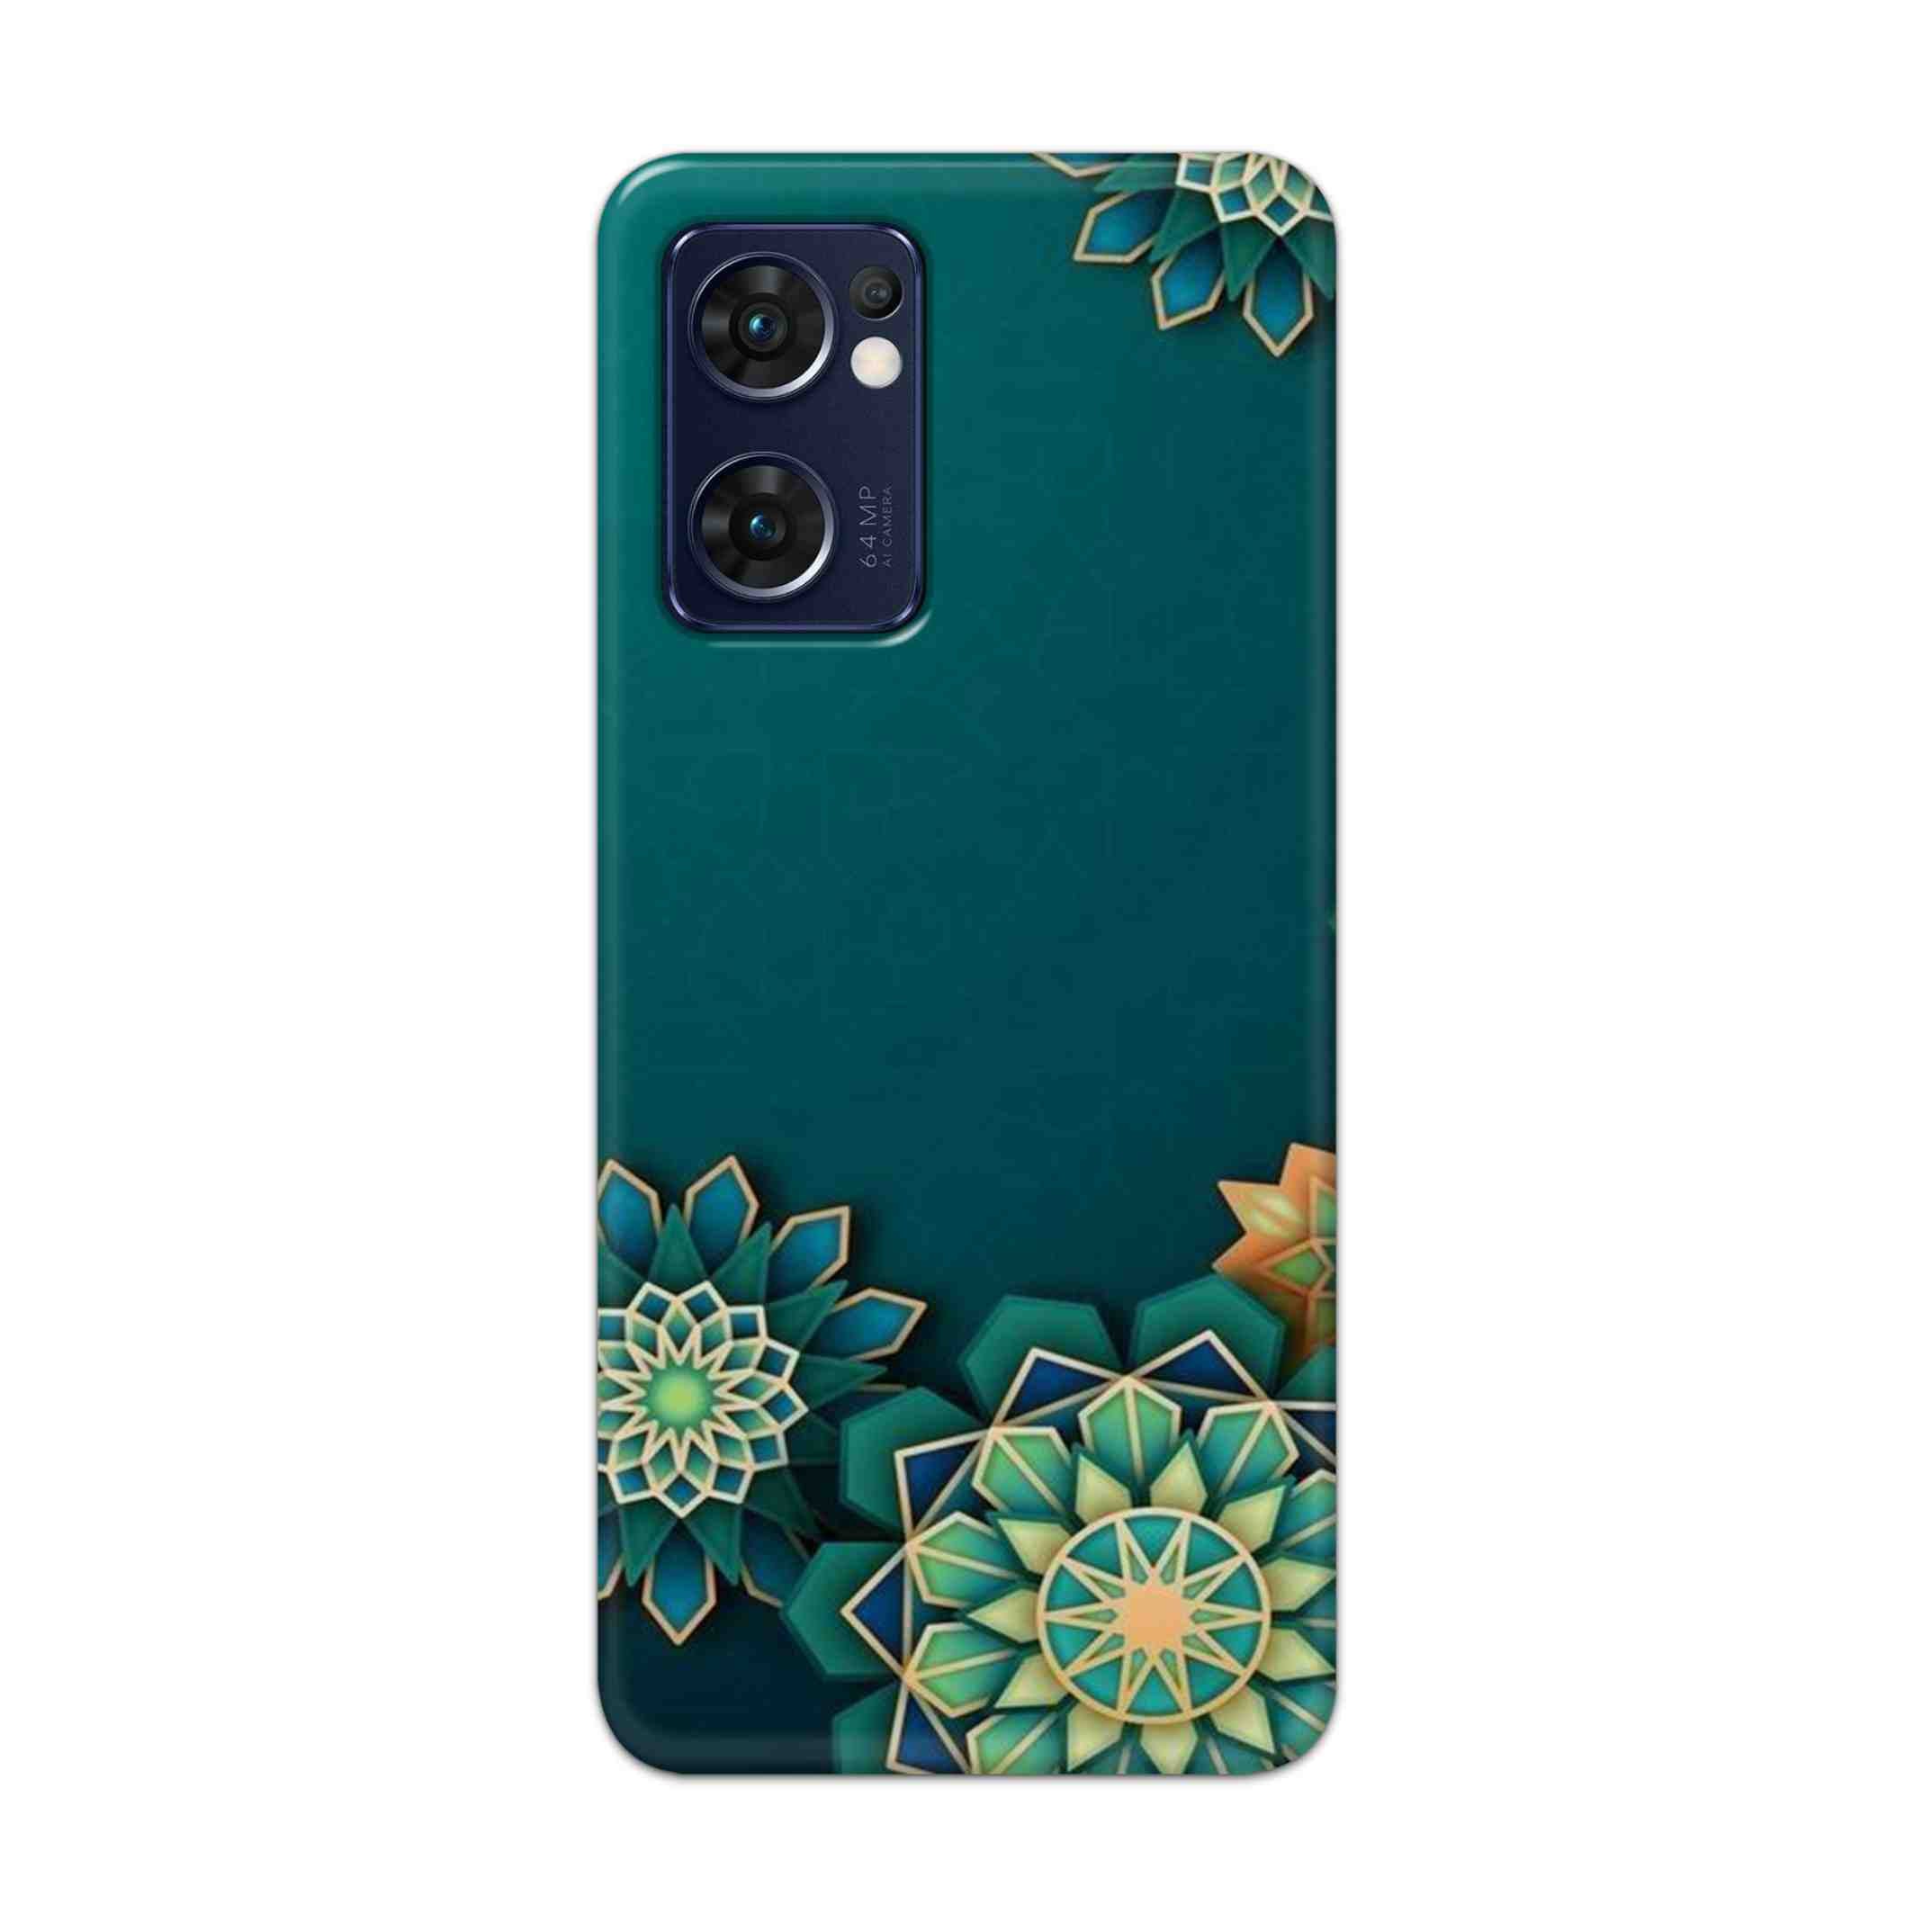 Buy Green Flower Hard Back Mobile Phone Case Cover For Reno 7 5G Online